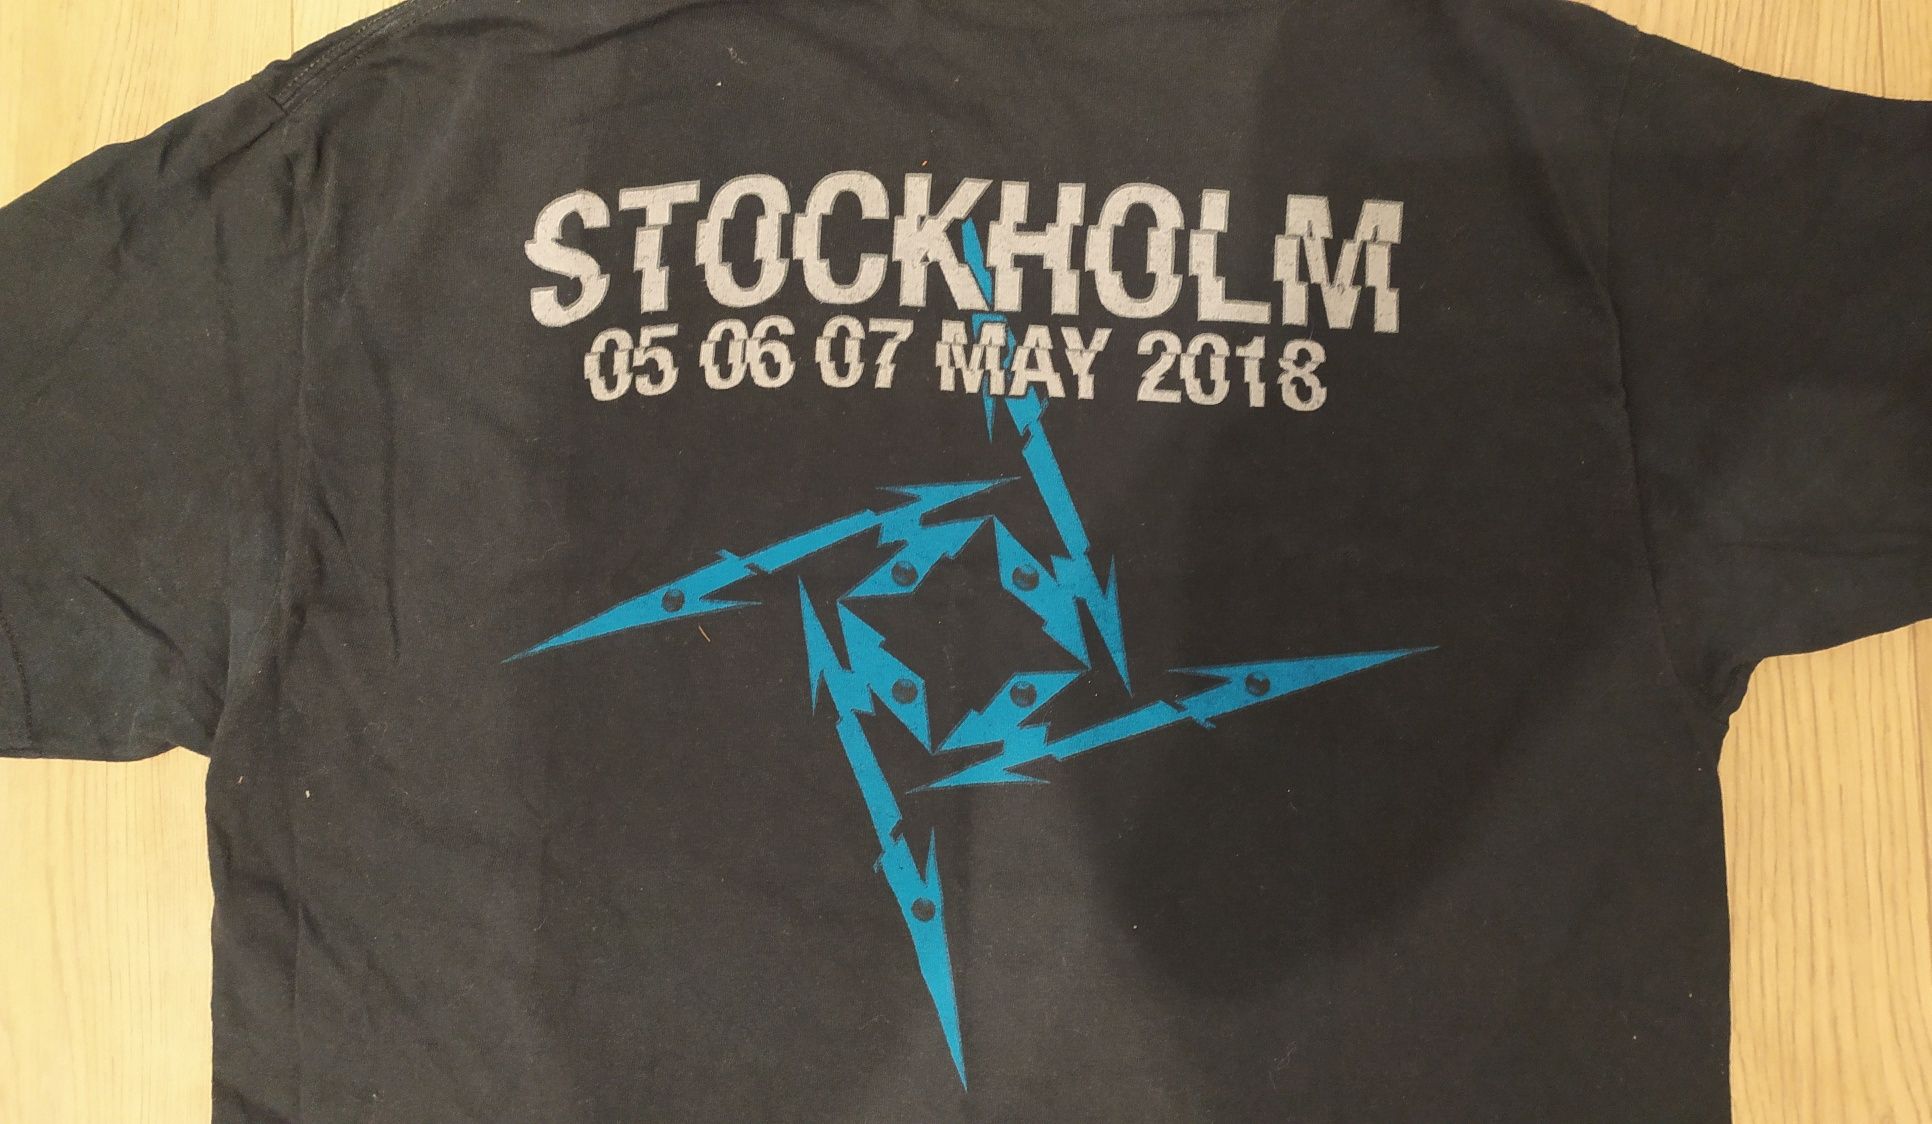 Koszulka, Metallica, t-shirt, koncert Szwecja, metal,